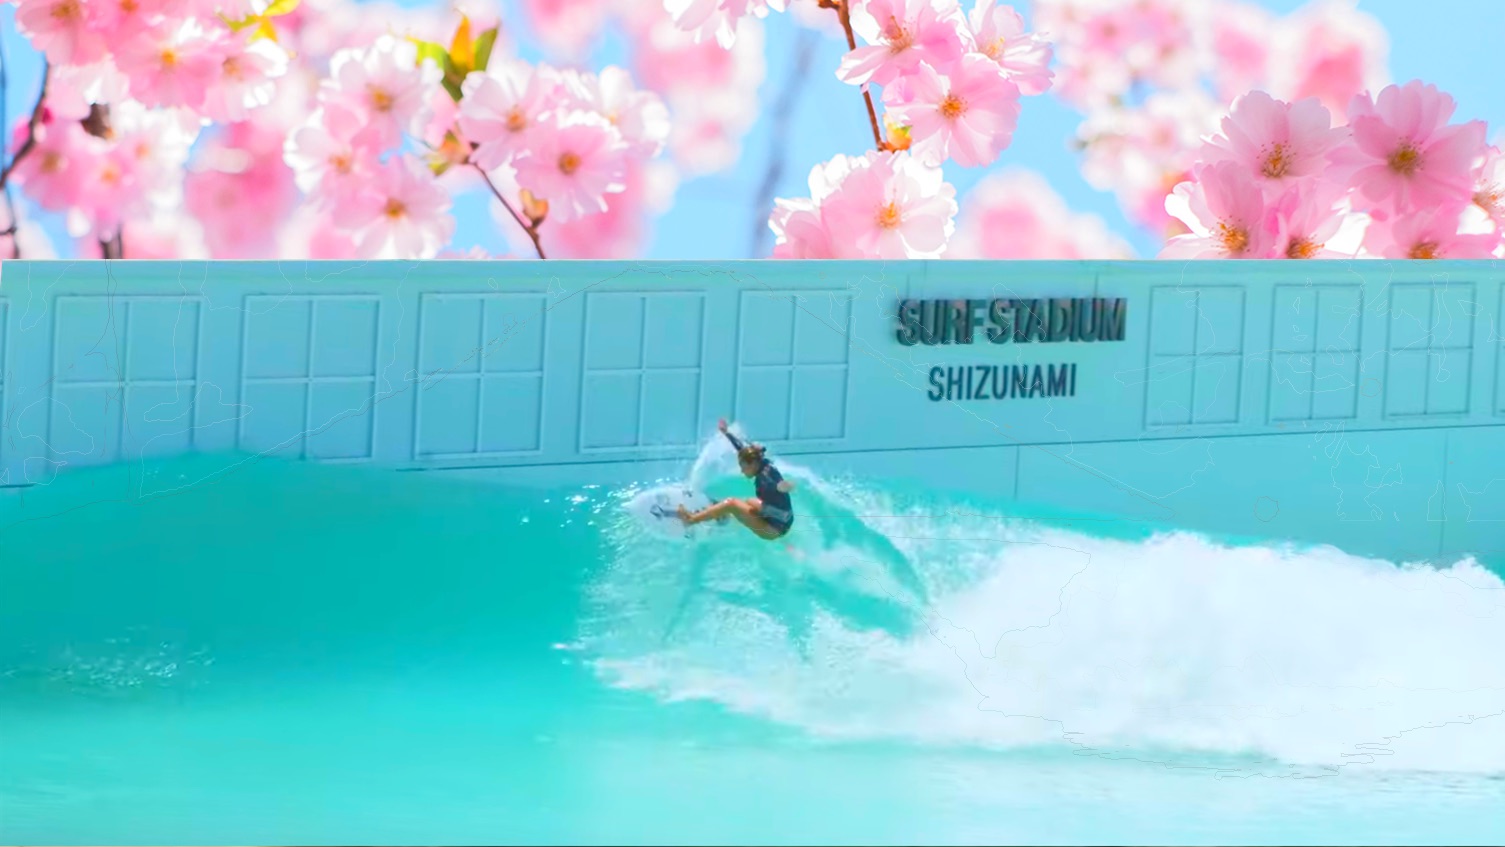 surf stadium in shizunami japan